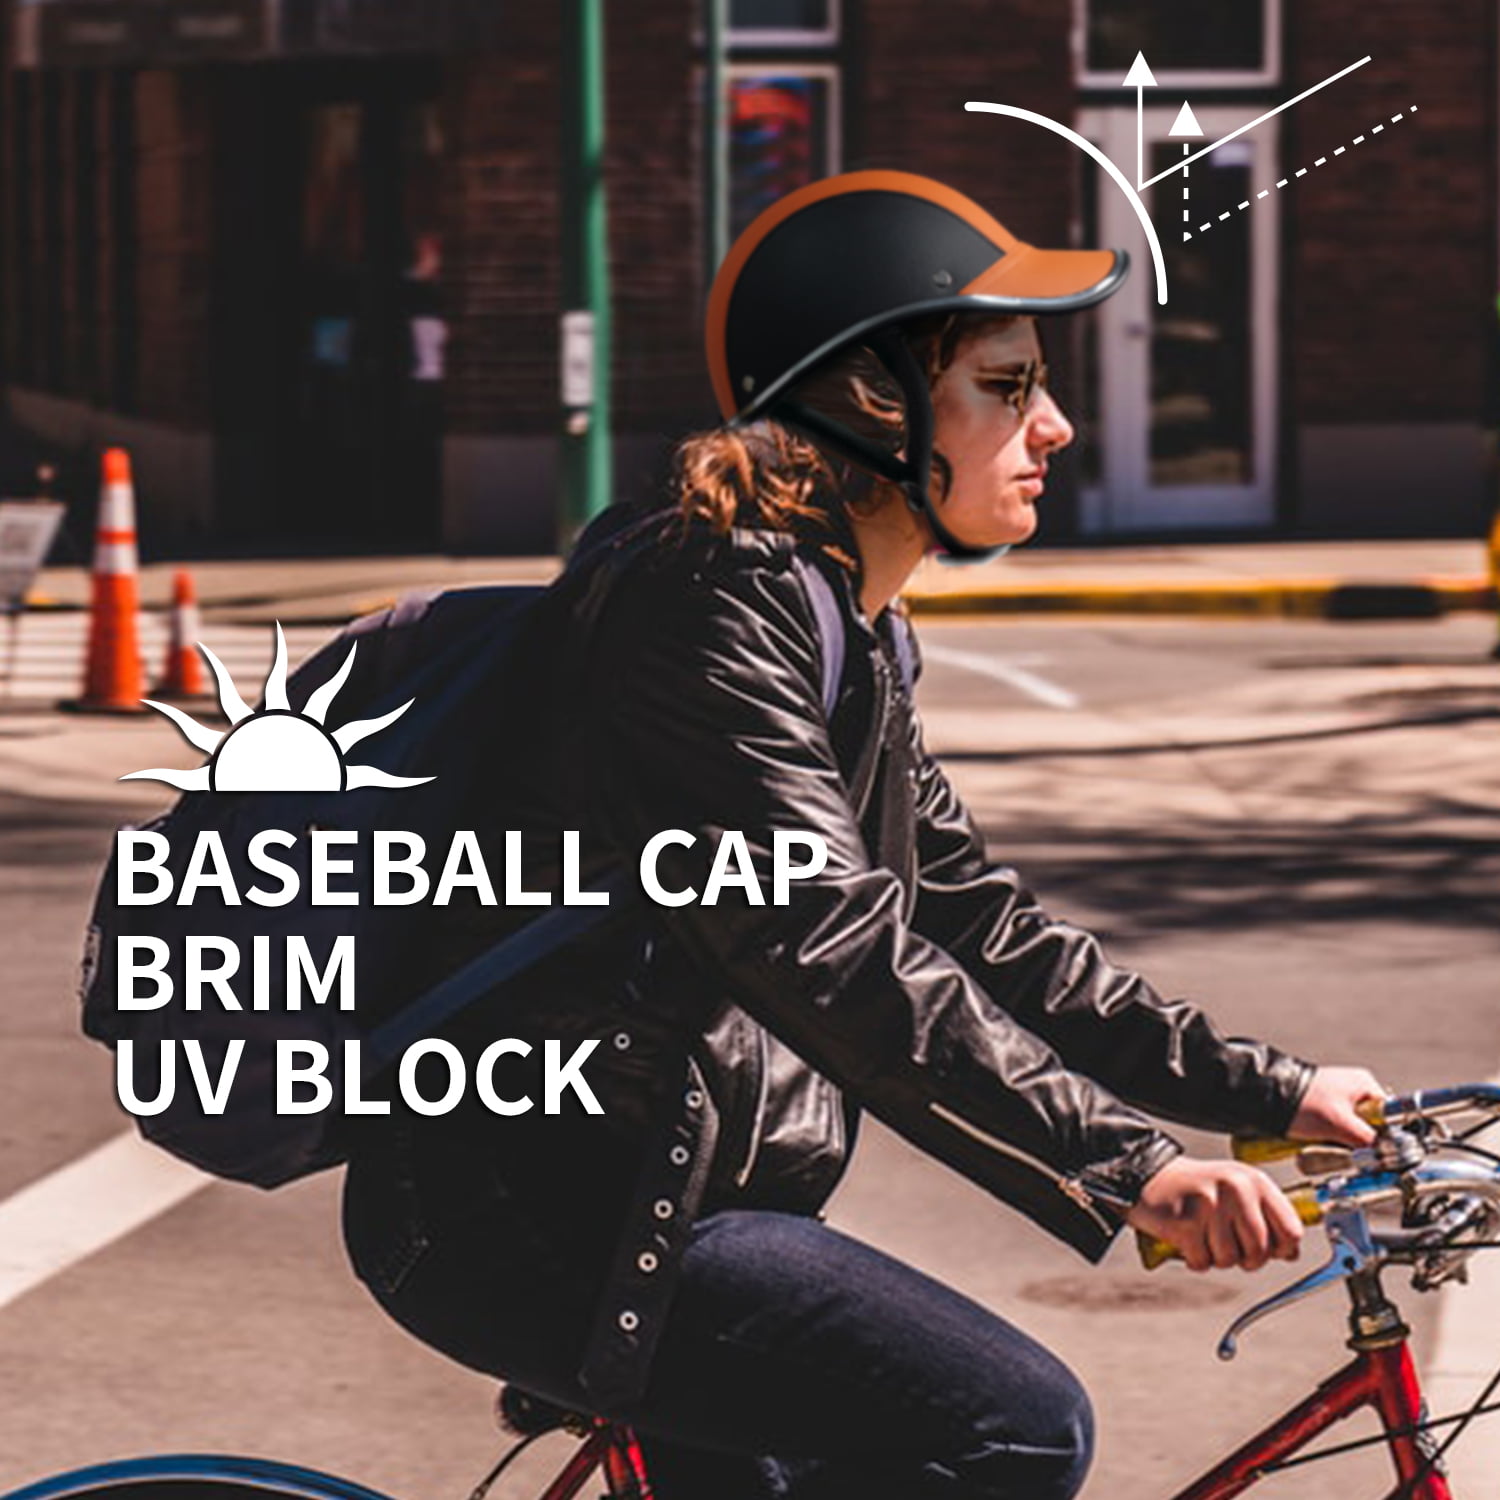 FROFILE Bike Helmet Adults-Cycling-Bicycle Baseball-Helmet Safety Urban Style Adjustable Adults Bike Helmet Mountain Road MTB for Men Women Teen 